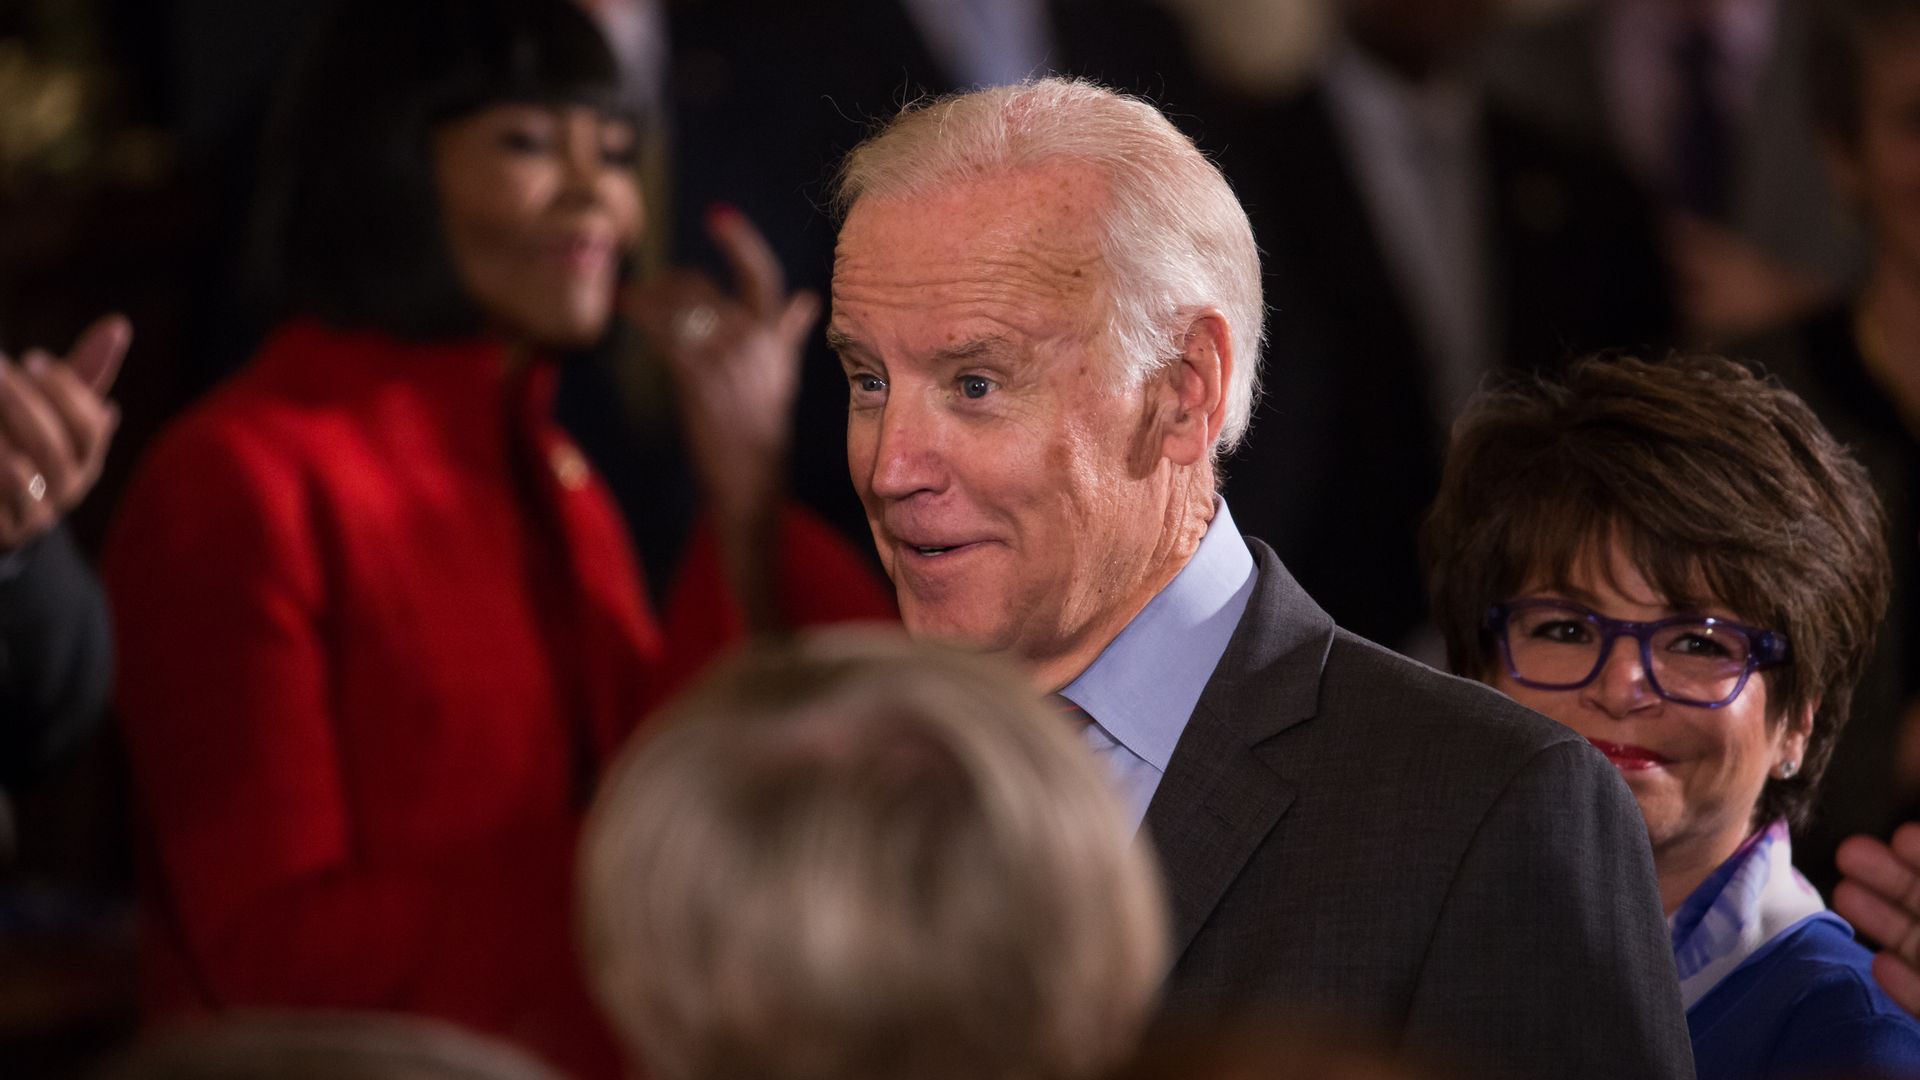 Joe Biden stands in the foreground with Valerie Jarrett behind him in a 2016 photo